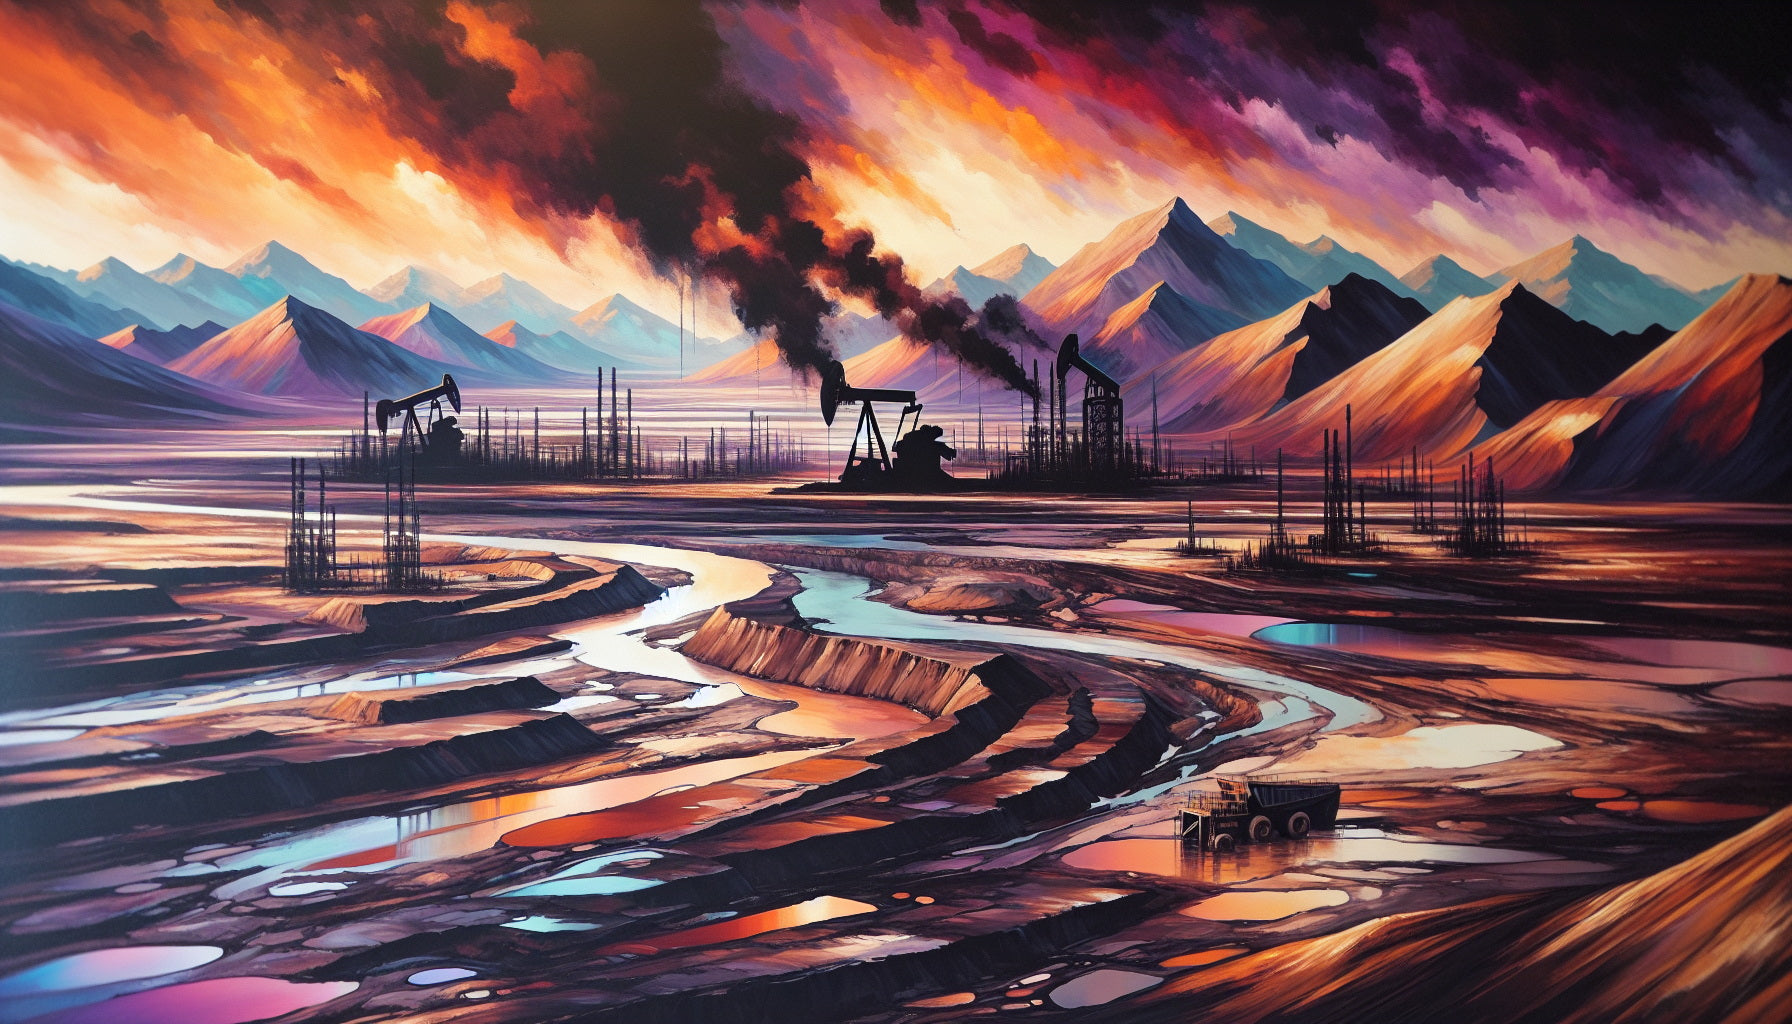 Artistic representation of Canada's oil sands